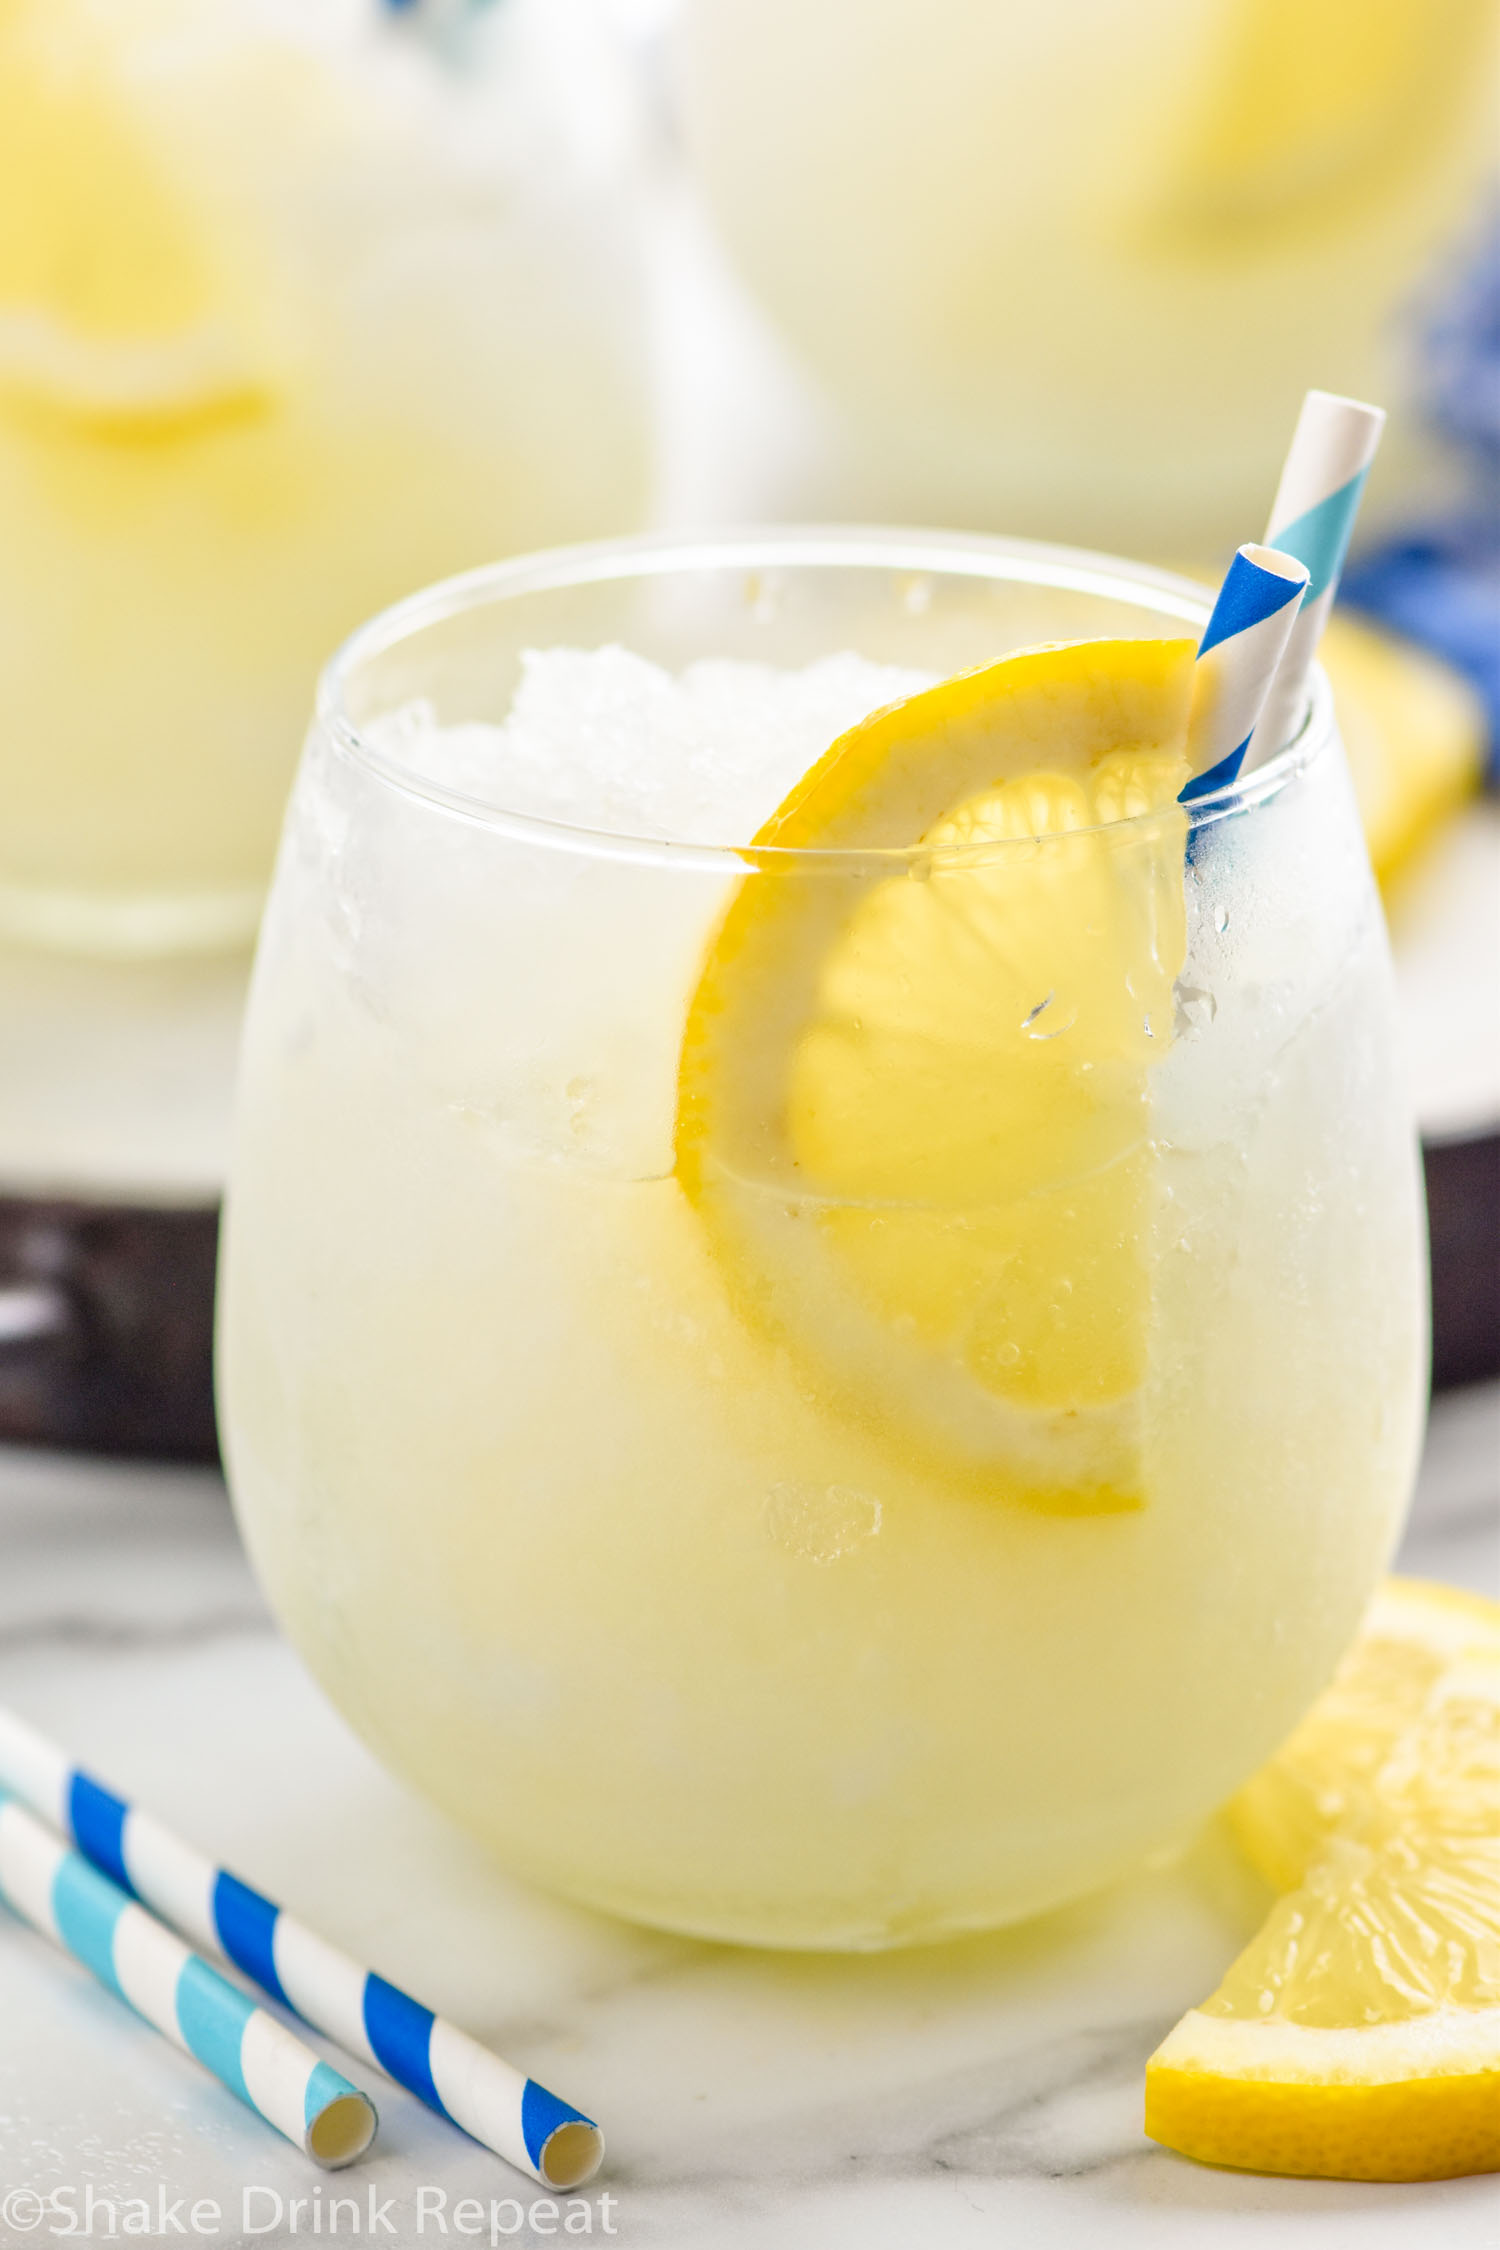 glass of frozen lemonade with a straw and lemon slice garnish